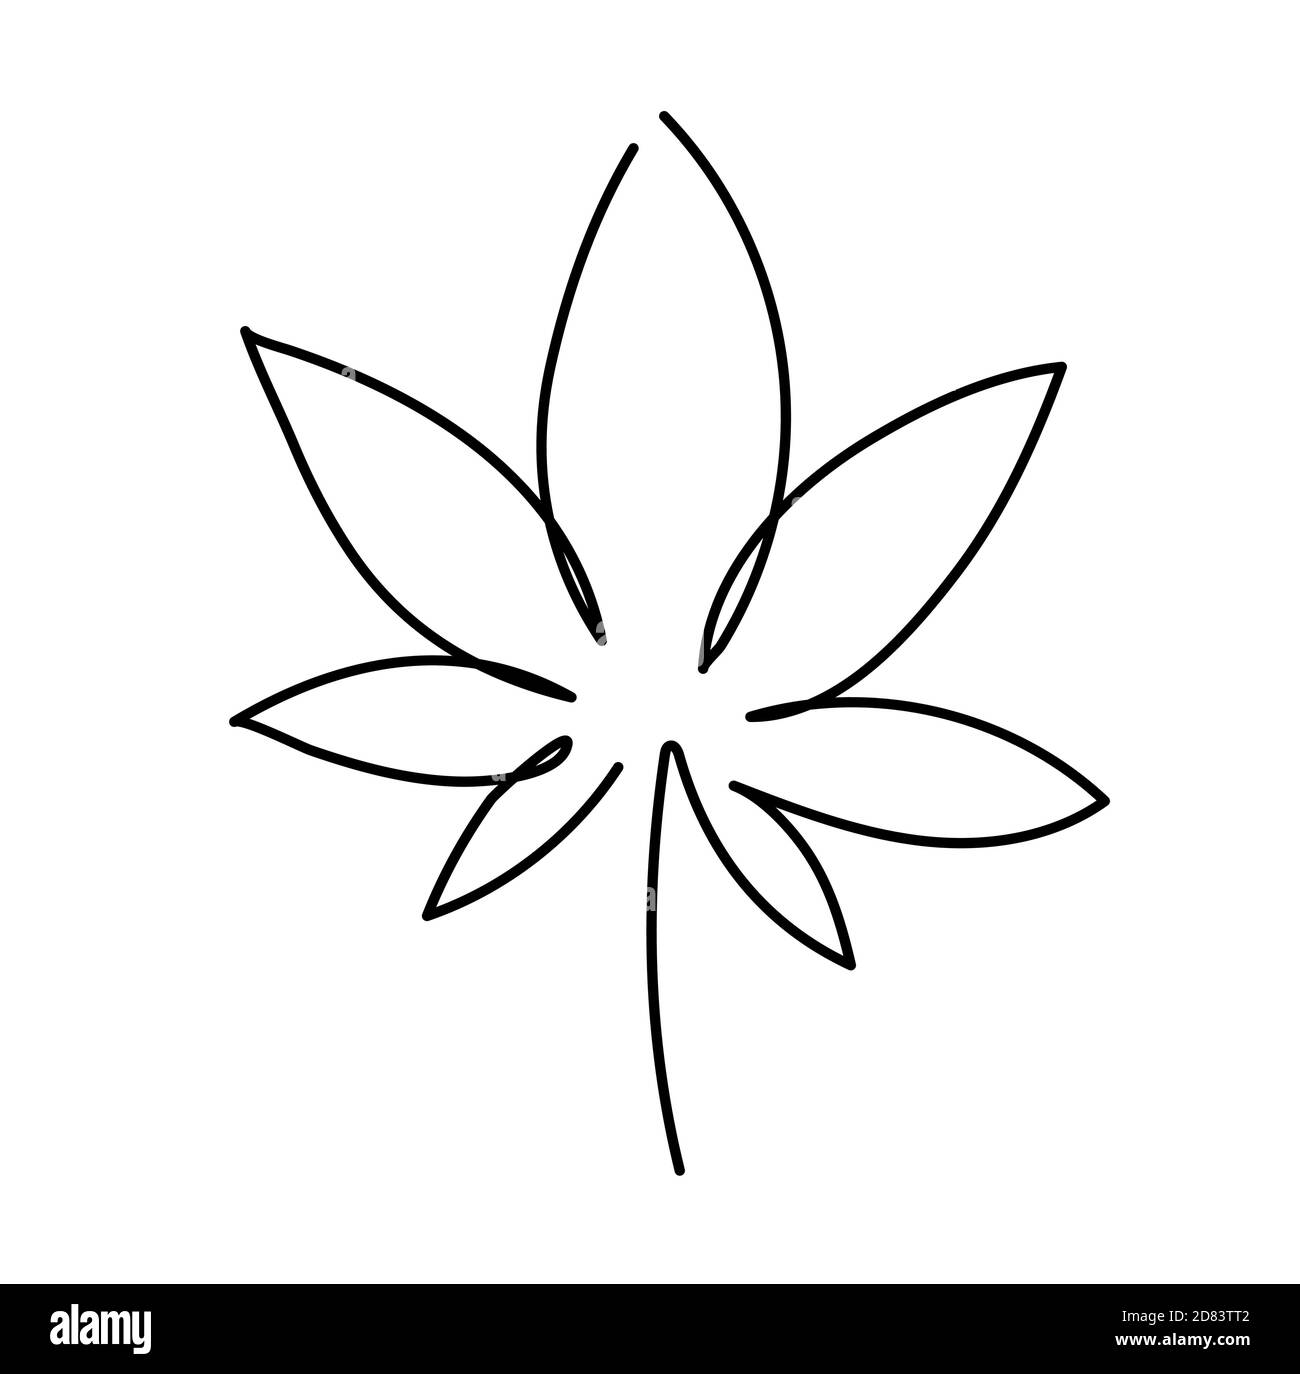 Cannabis leaf icon. Graphic line drawing of marijuana, logo, symbol. Vector illustration. Beautiful minimalistic hand drawing of a plant Stock Vector